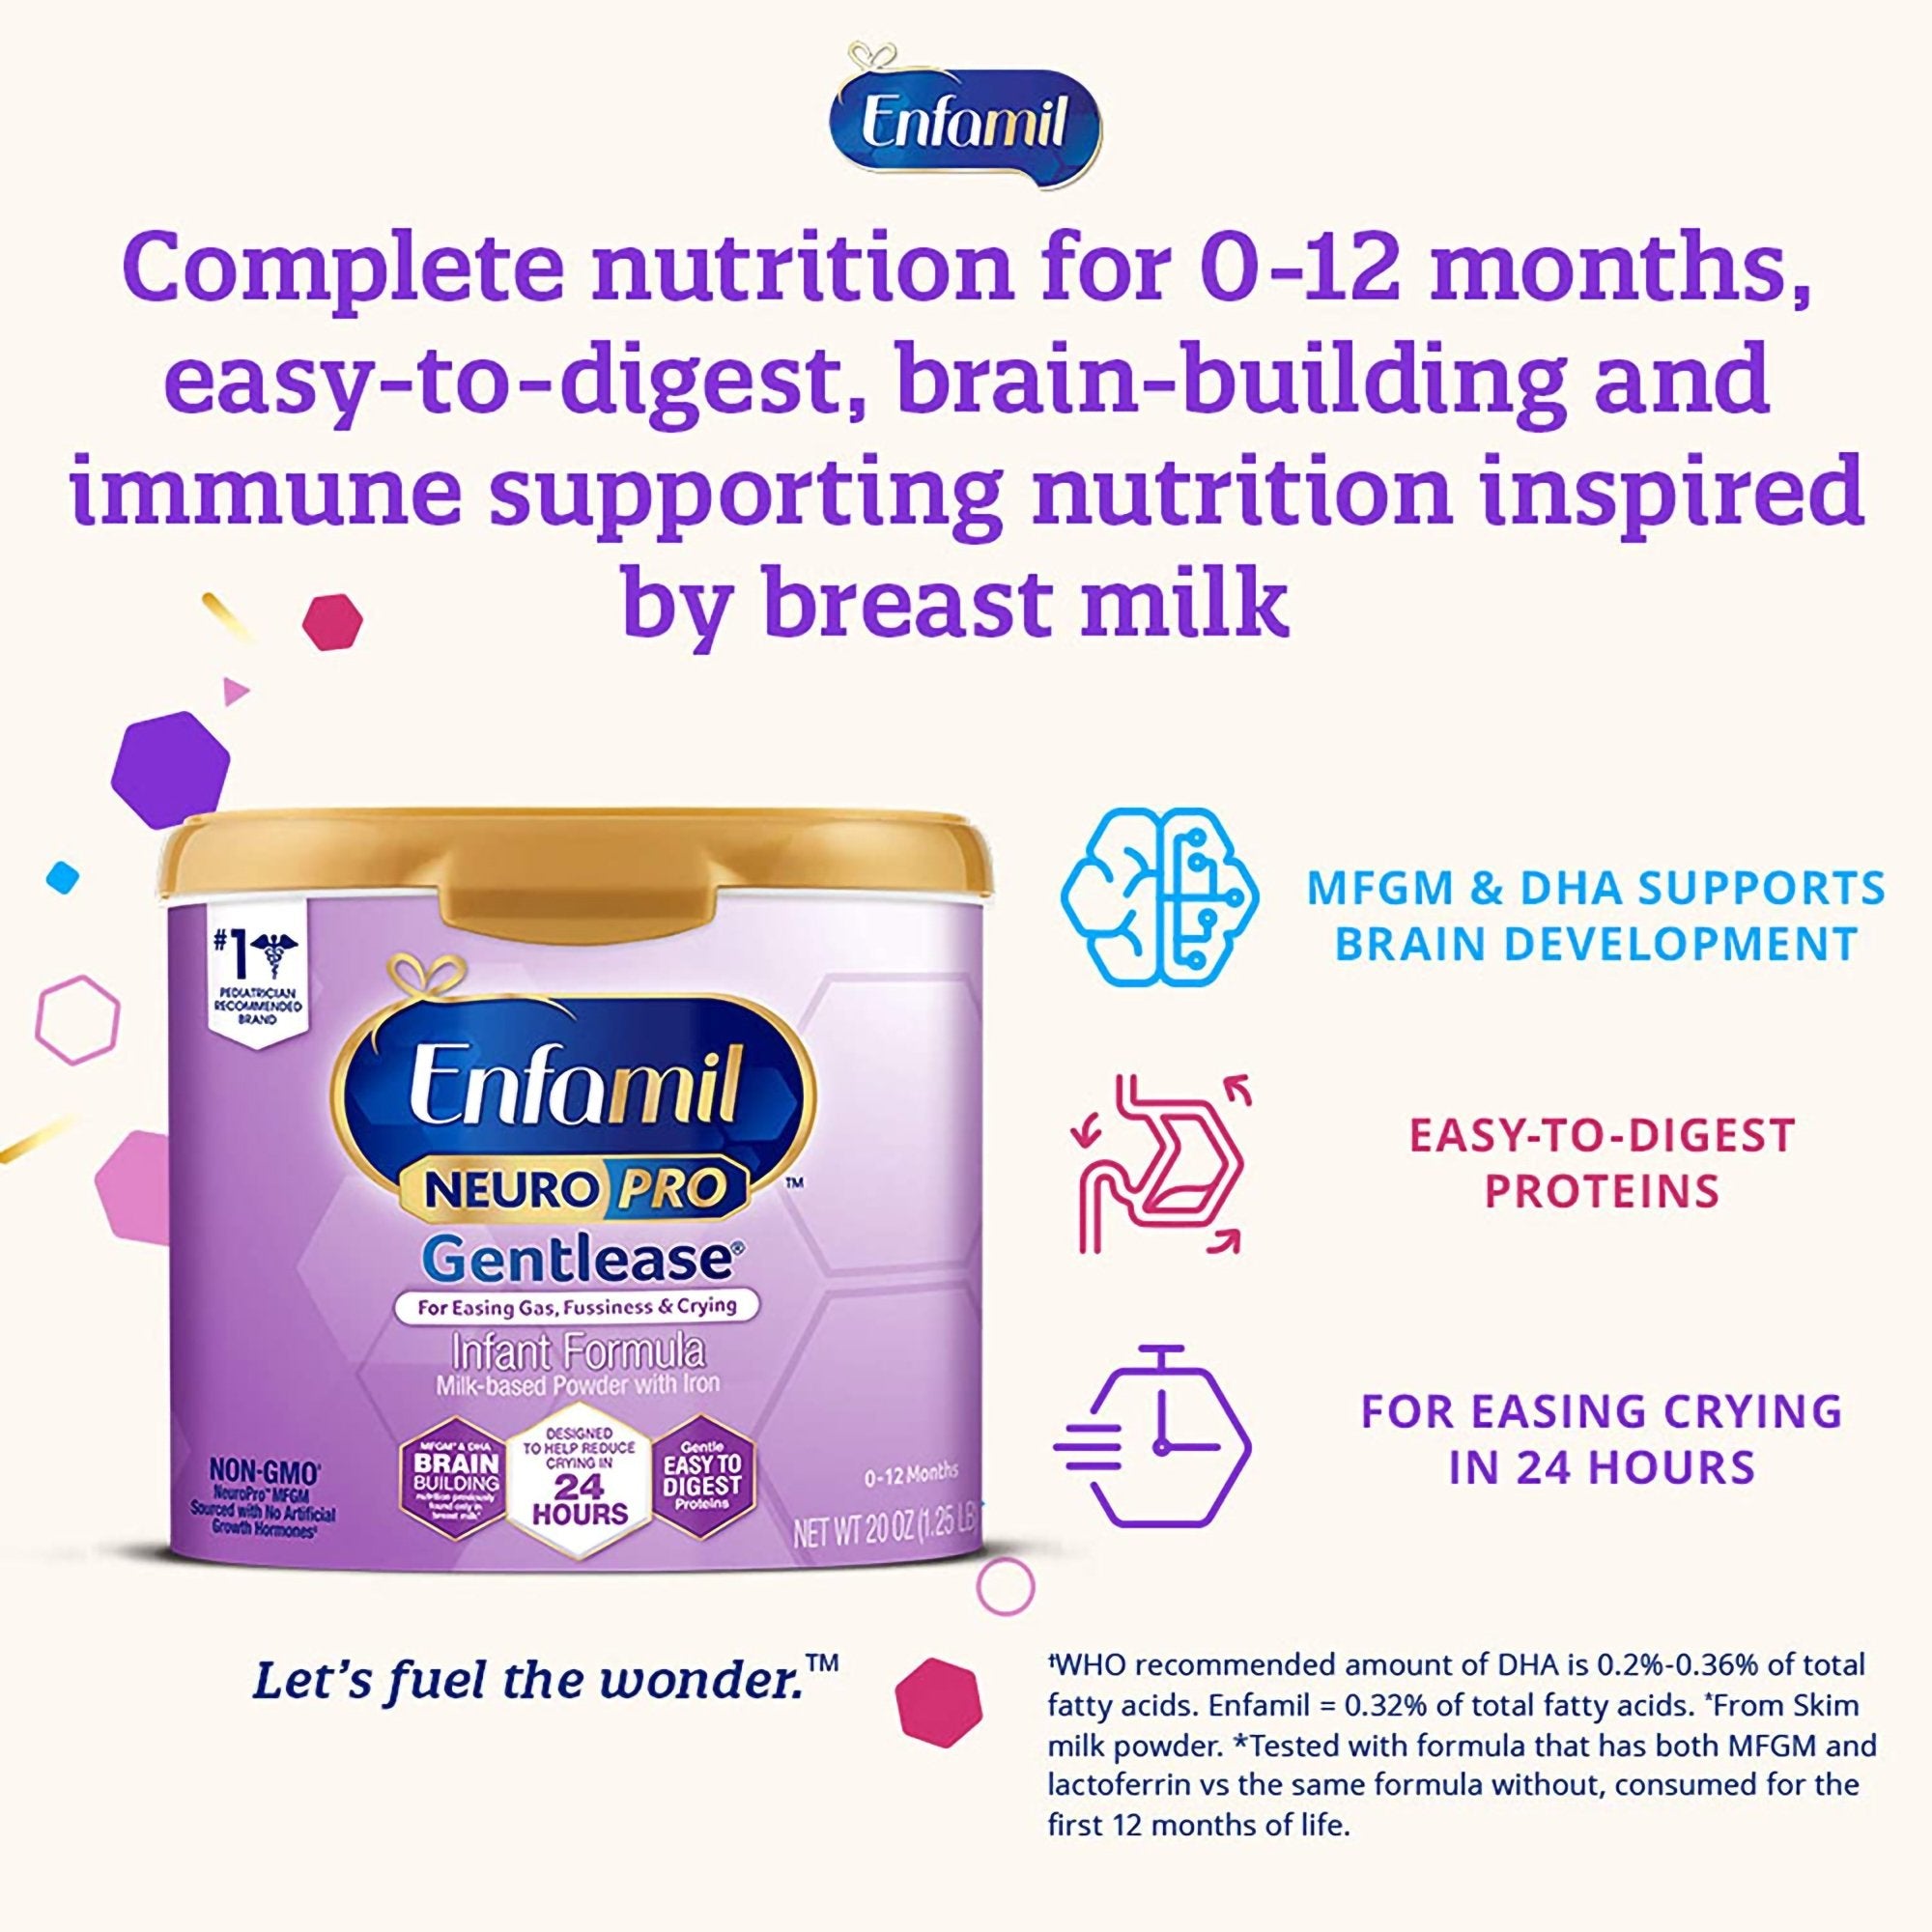 Infant Formula Enfamil NeuroPro Gentlease 19.5 oz. Canister Powder Milk-Based Crying / Spitup